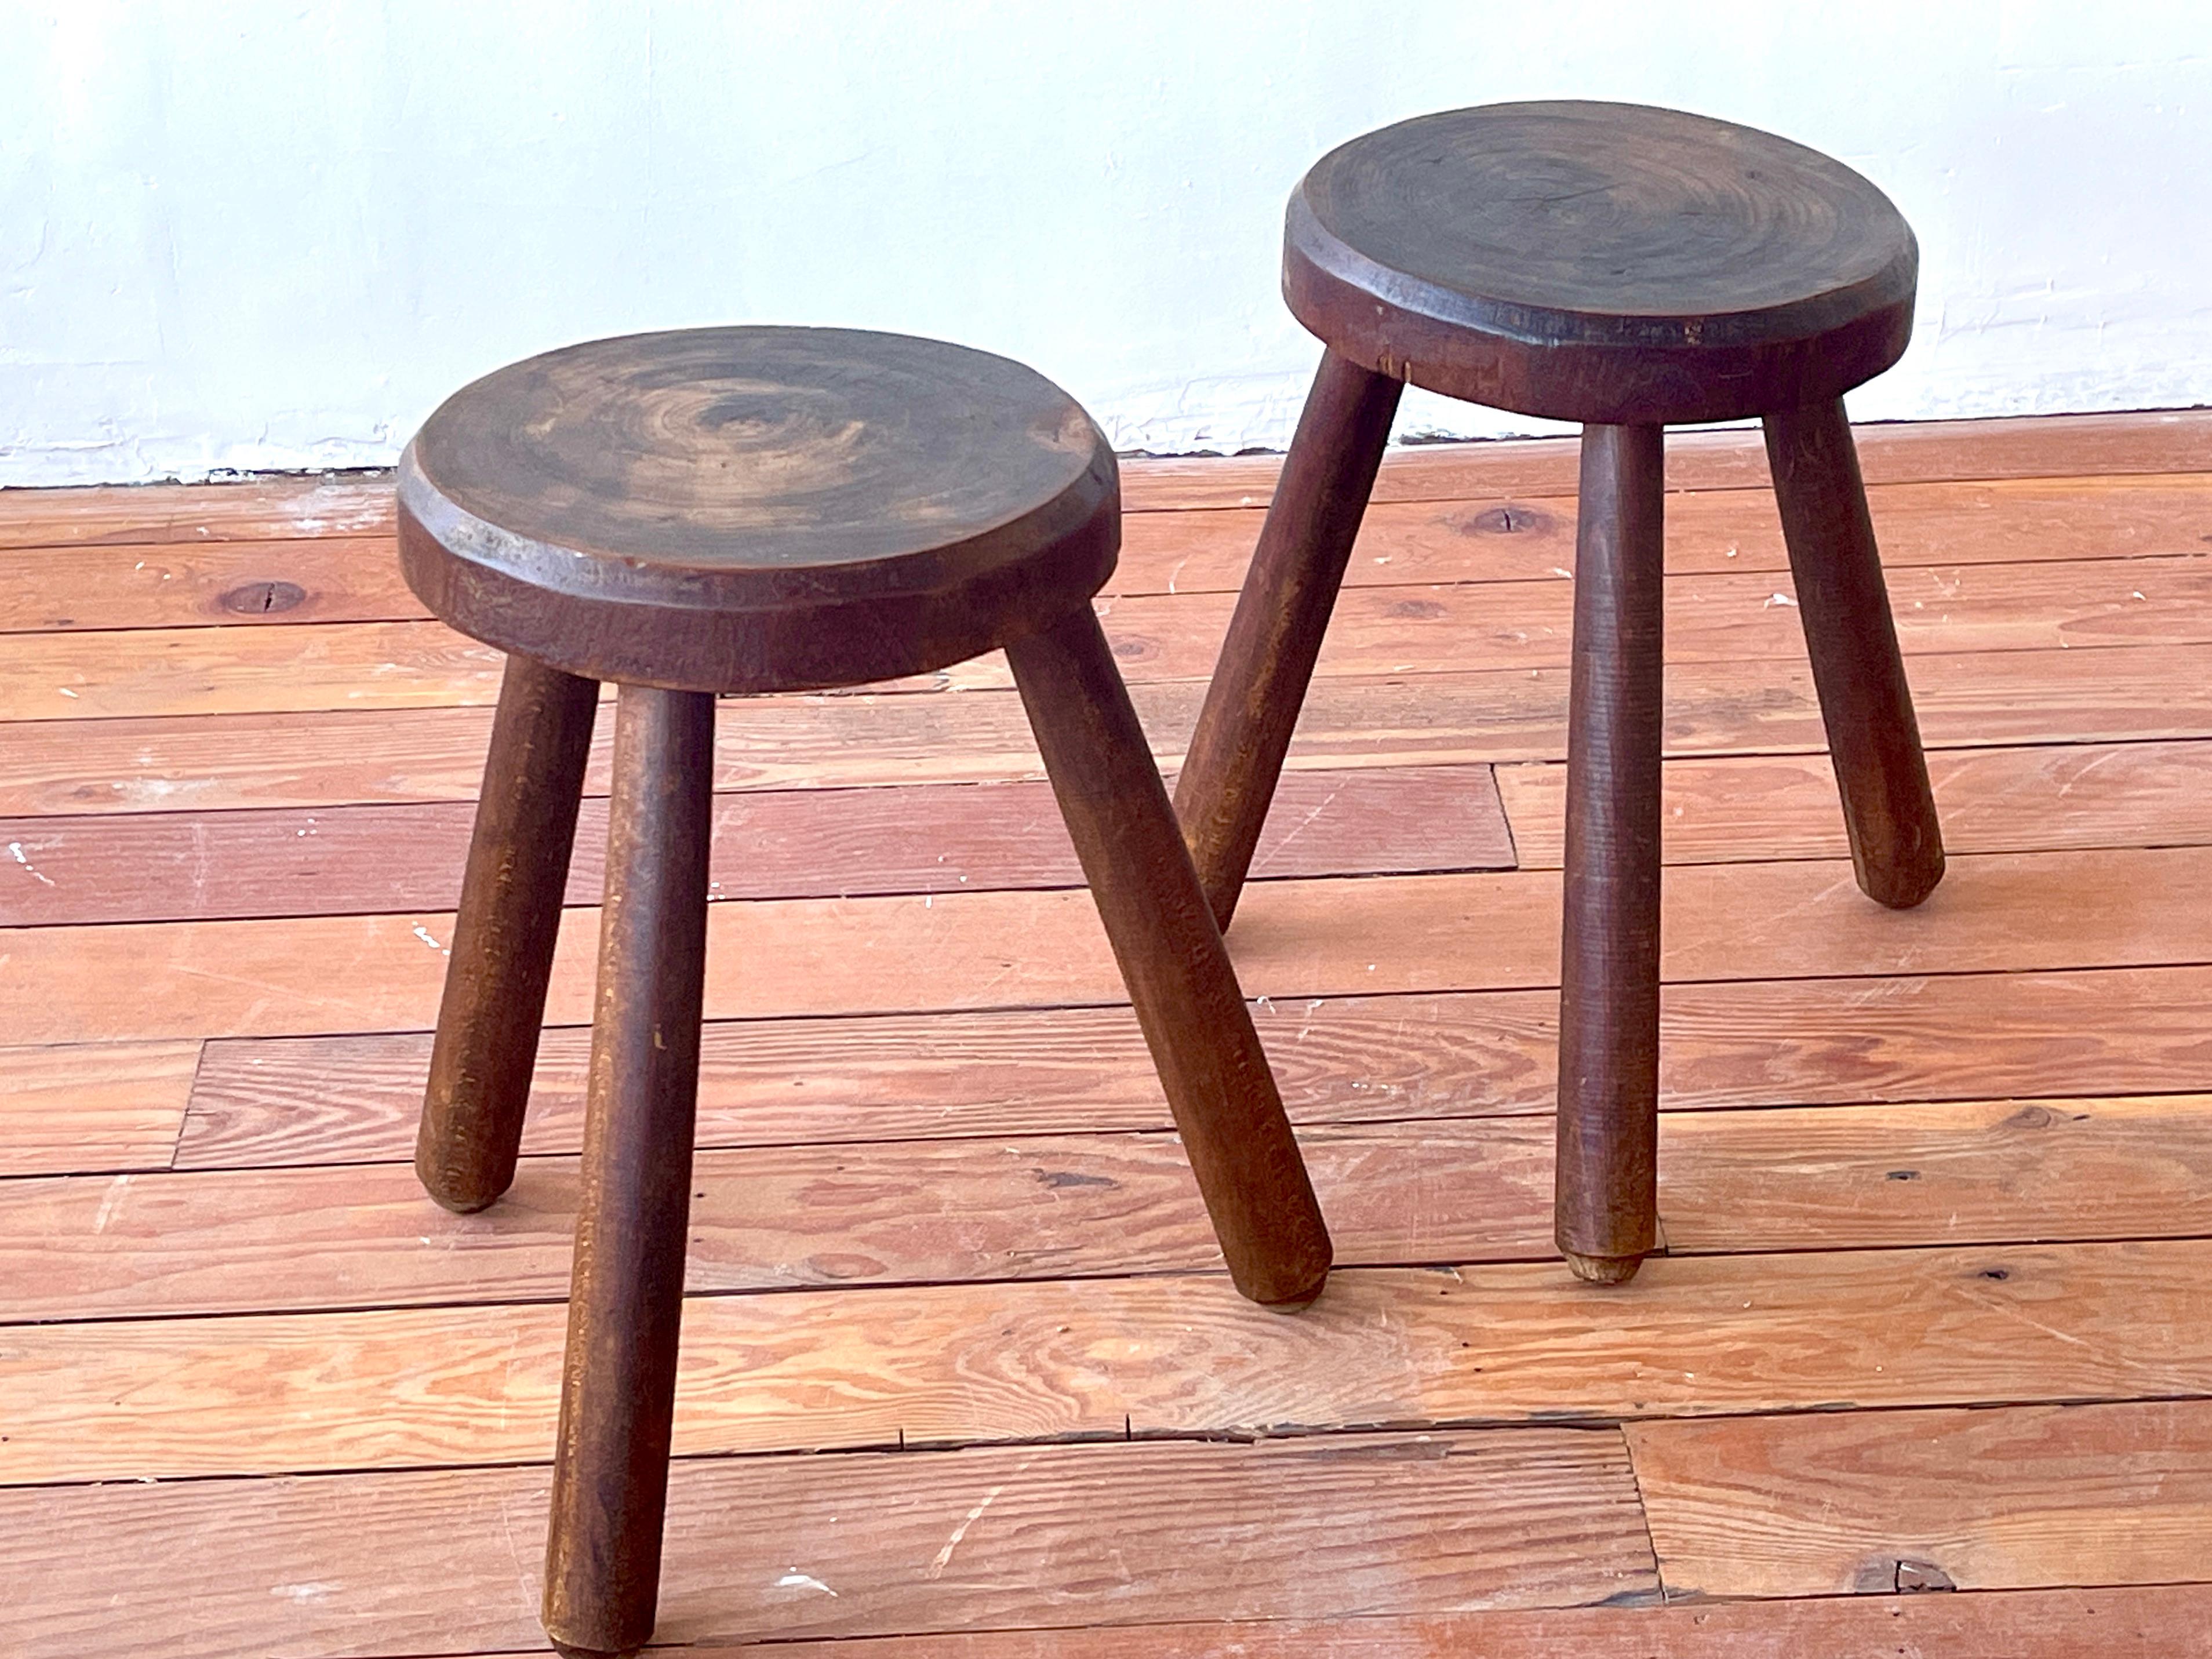 French Oak tripod stool with wonderful patina. One stool available.